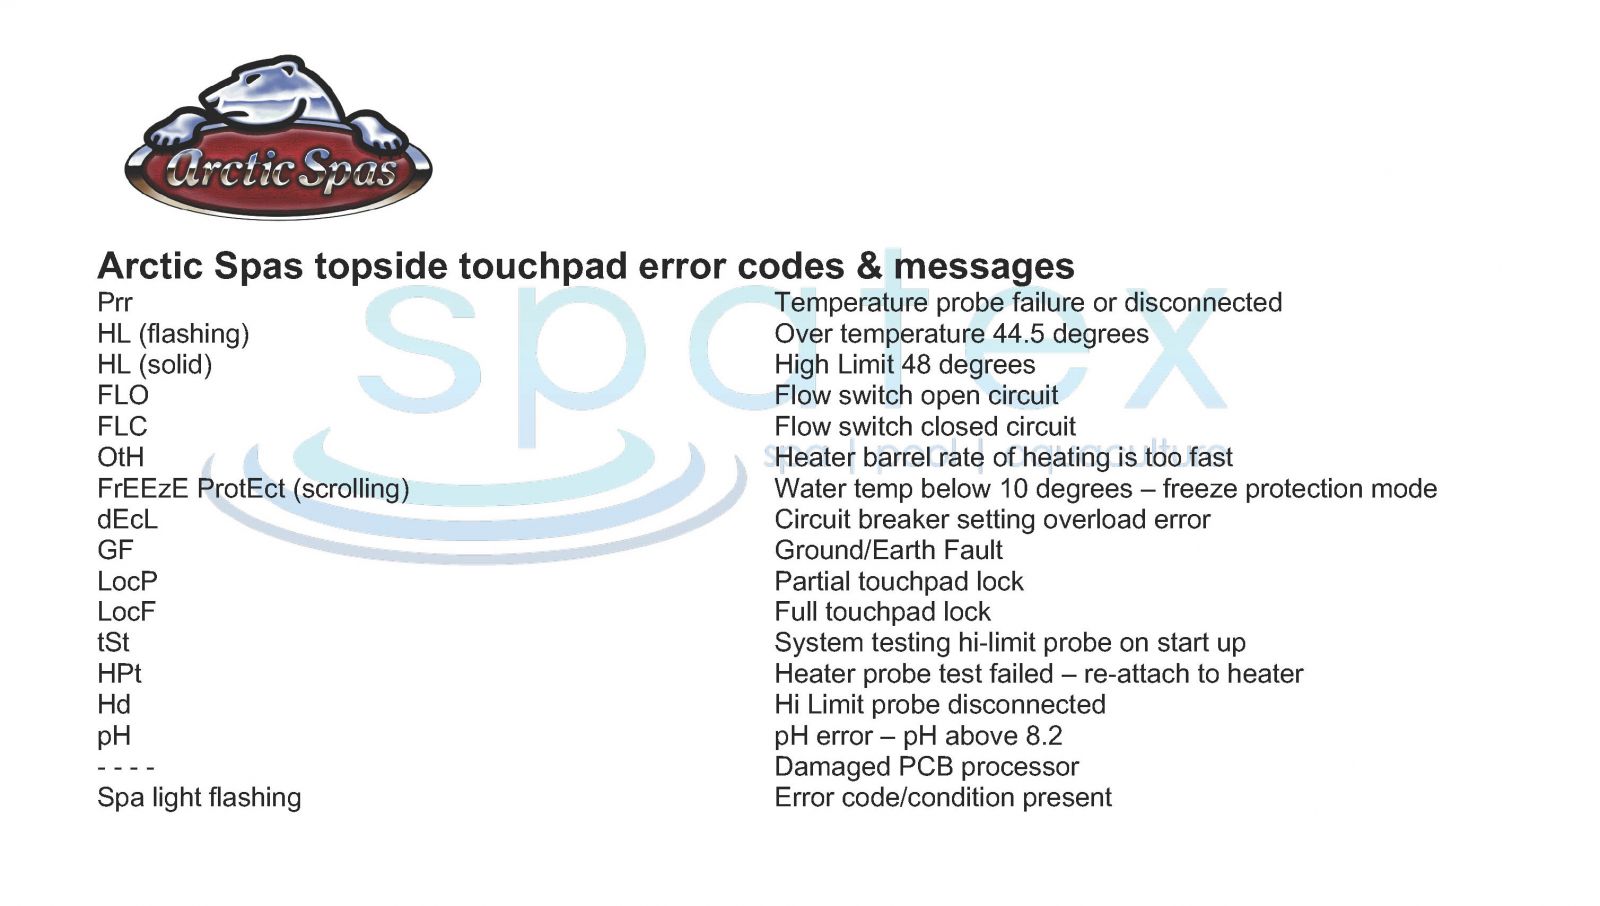 Arctic Spas topside touchpad fault codes, error messages